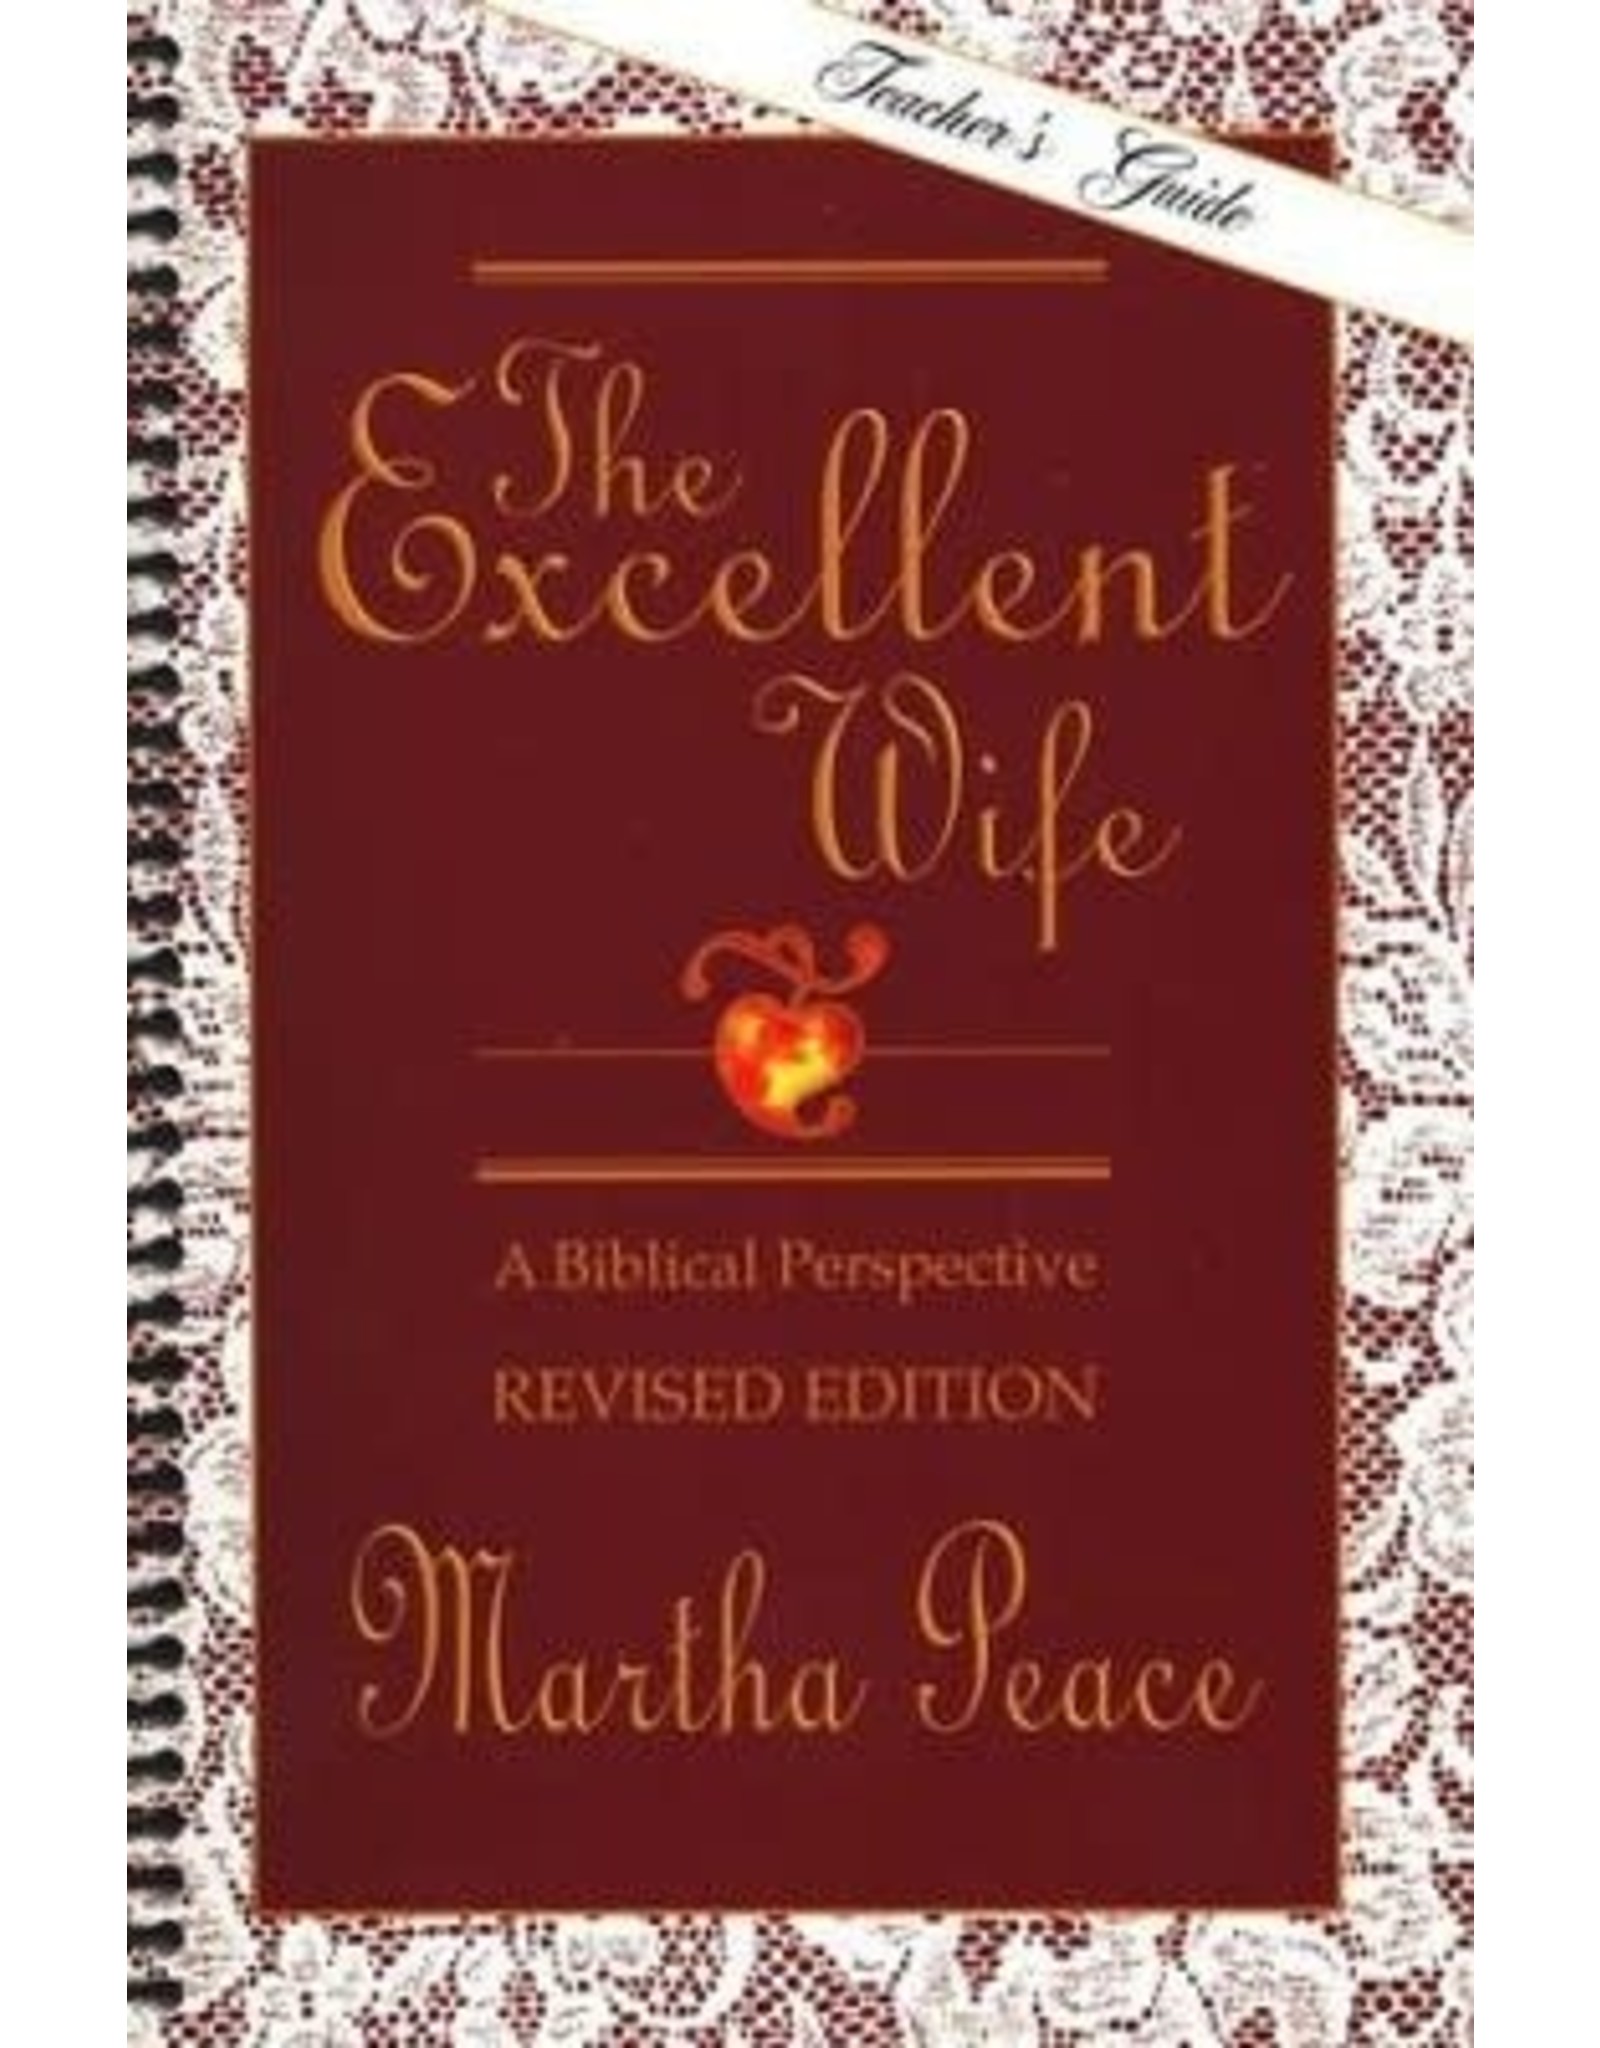 Martha Peace Excellent Wife Teacher's Guide